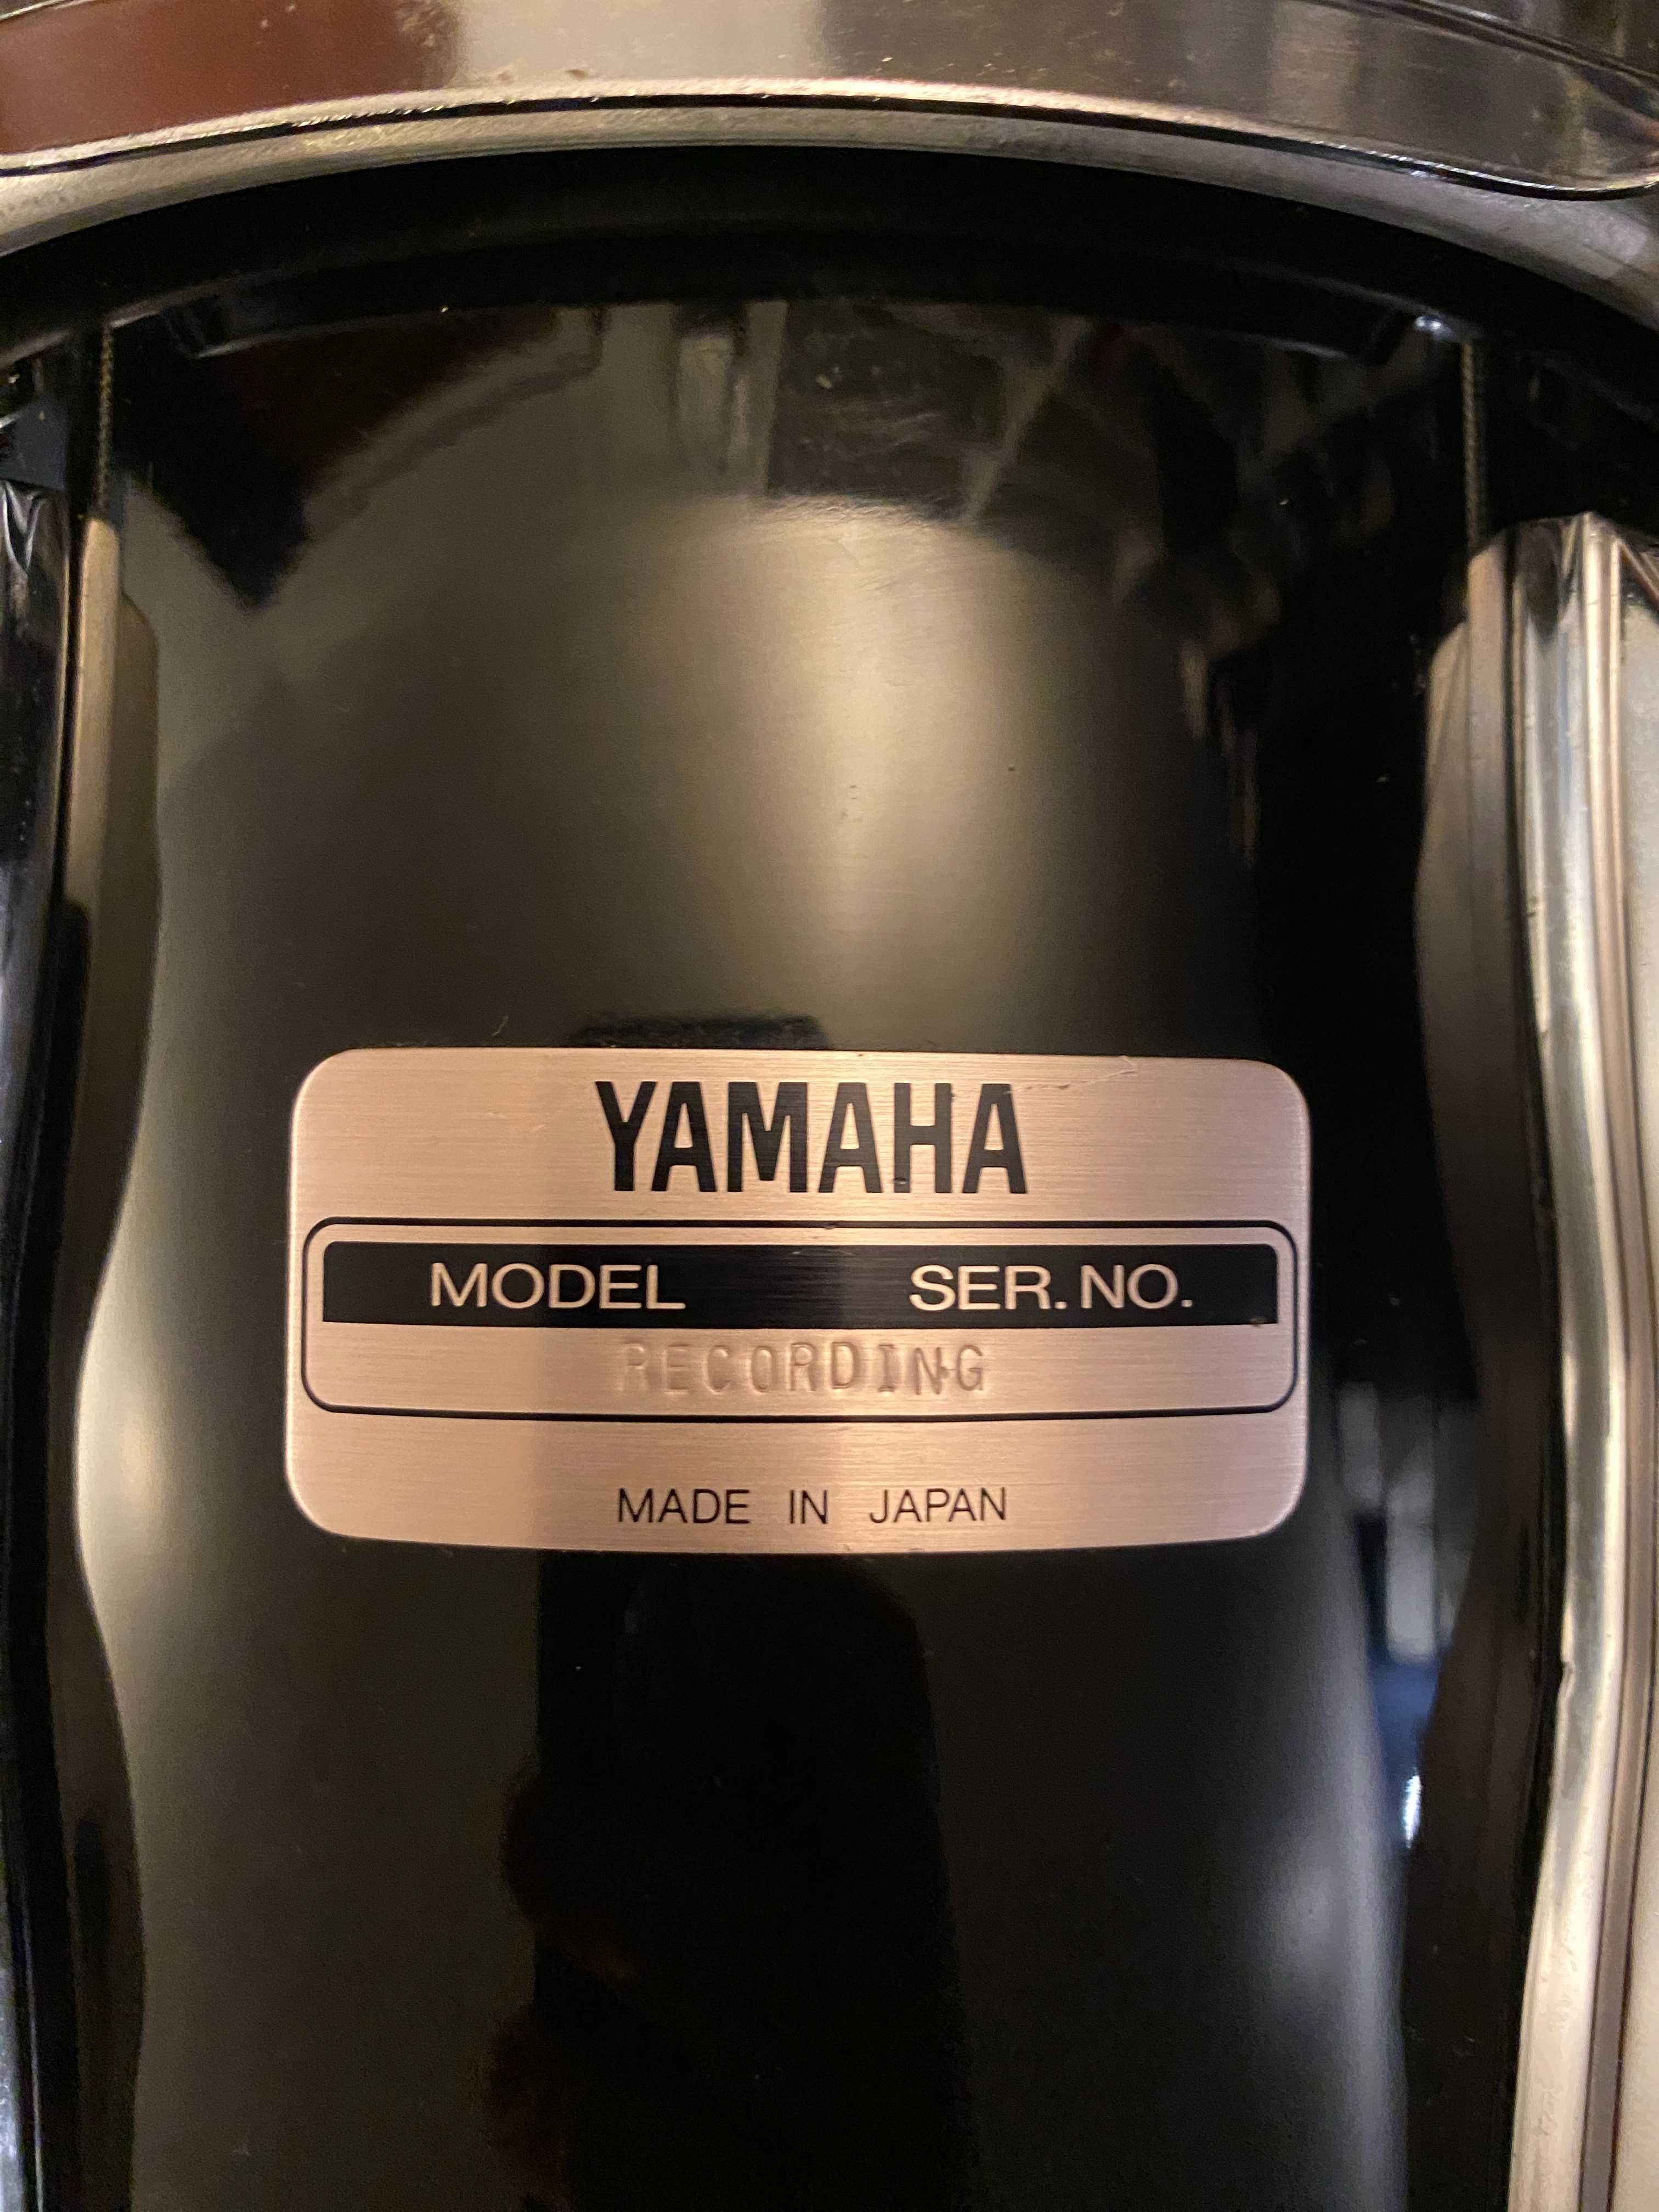 Yamaha Recording 9000, timbalão 8" Made in Japan.Excelente estado